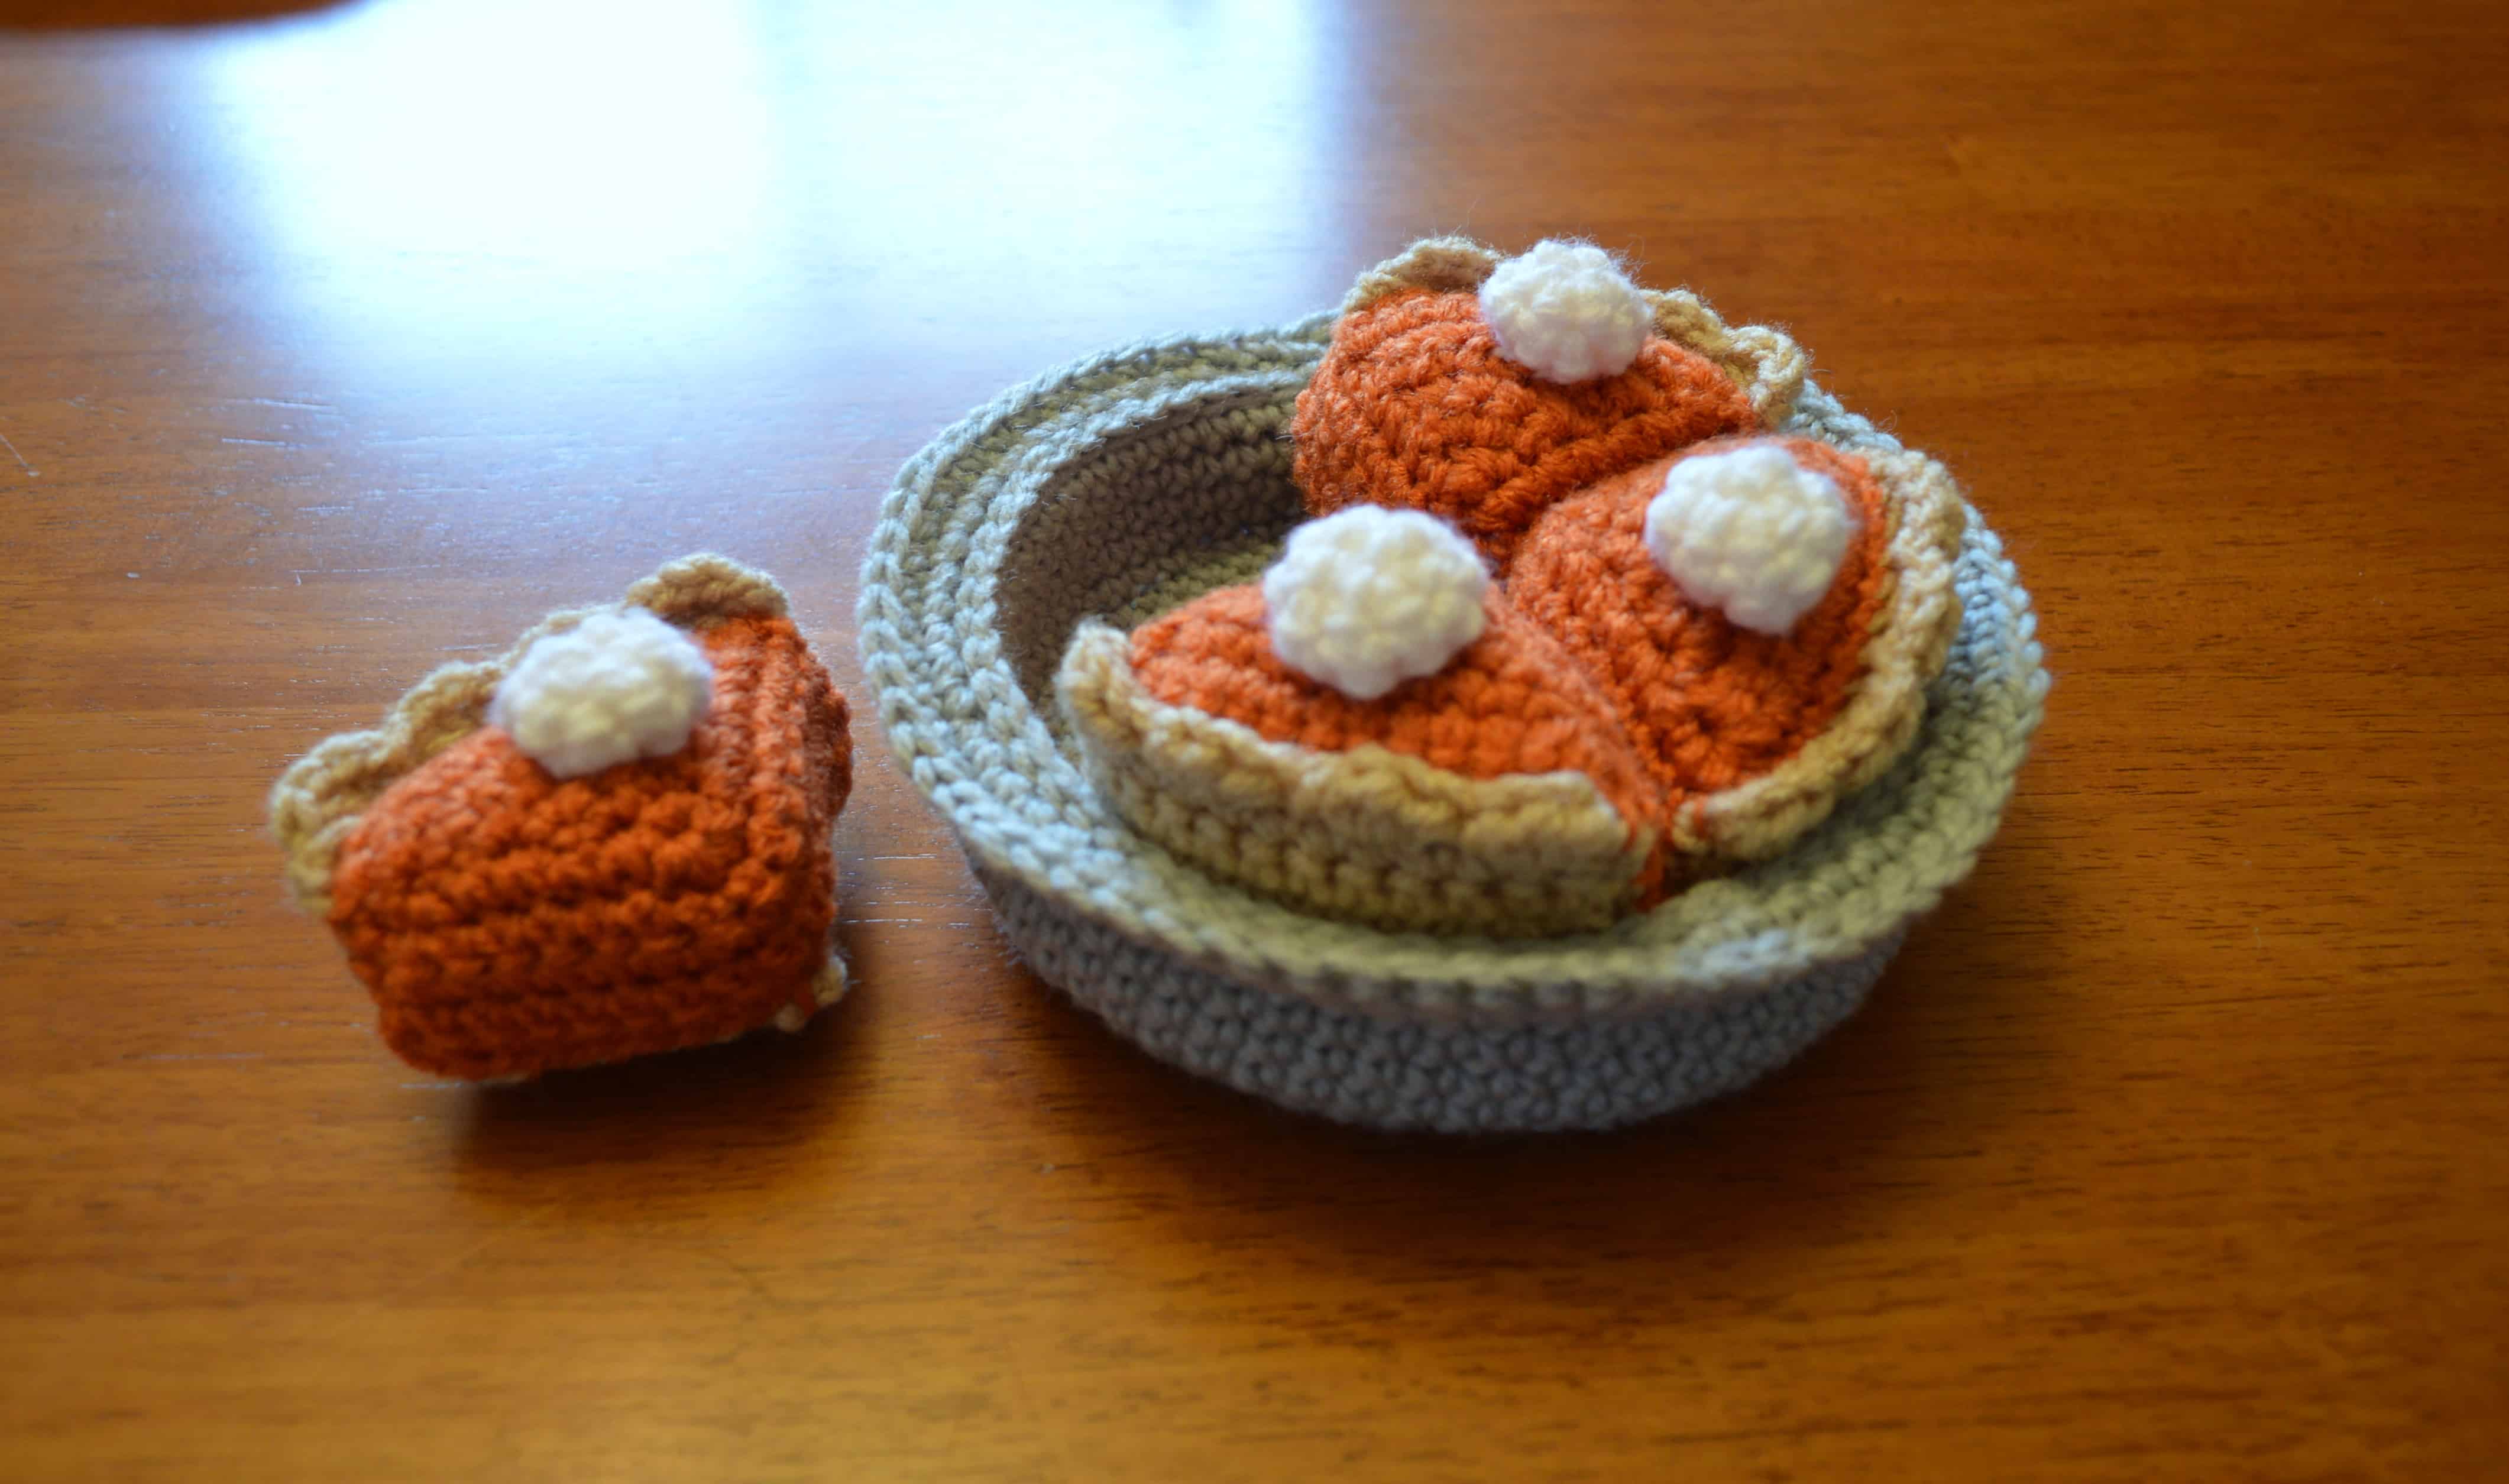 Crocheted pumpkin pie with pieces